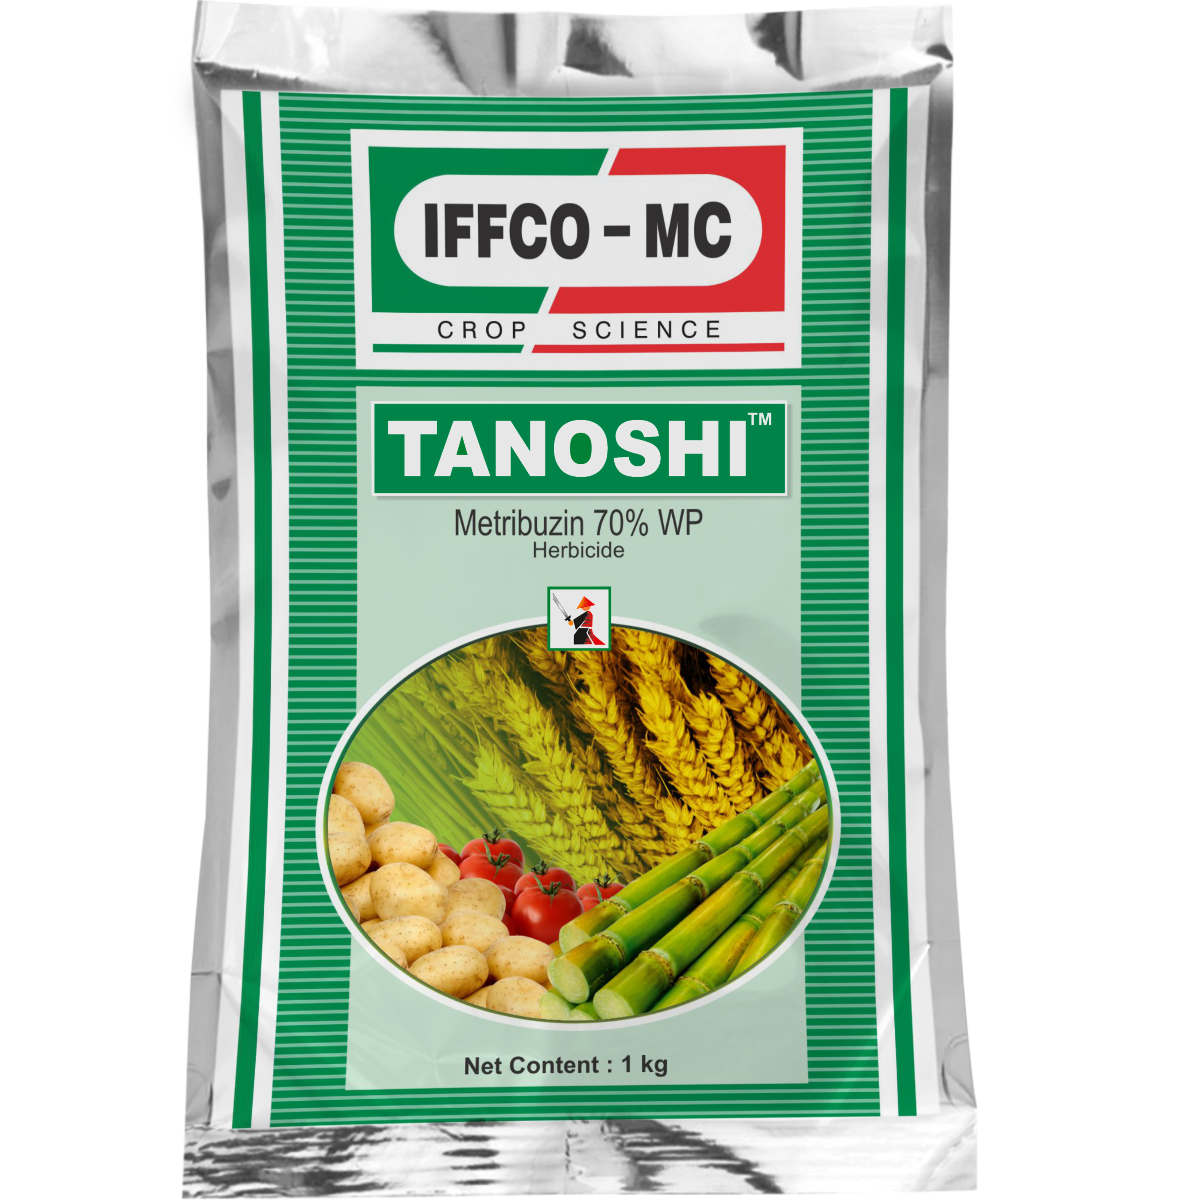 Tanoshi - Food - Tanoshi - Food updated their cover photo.